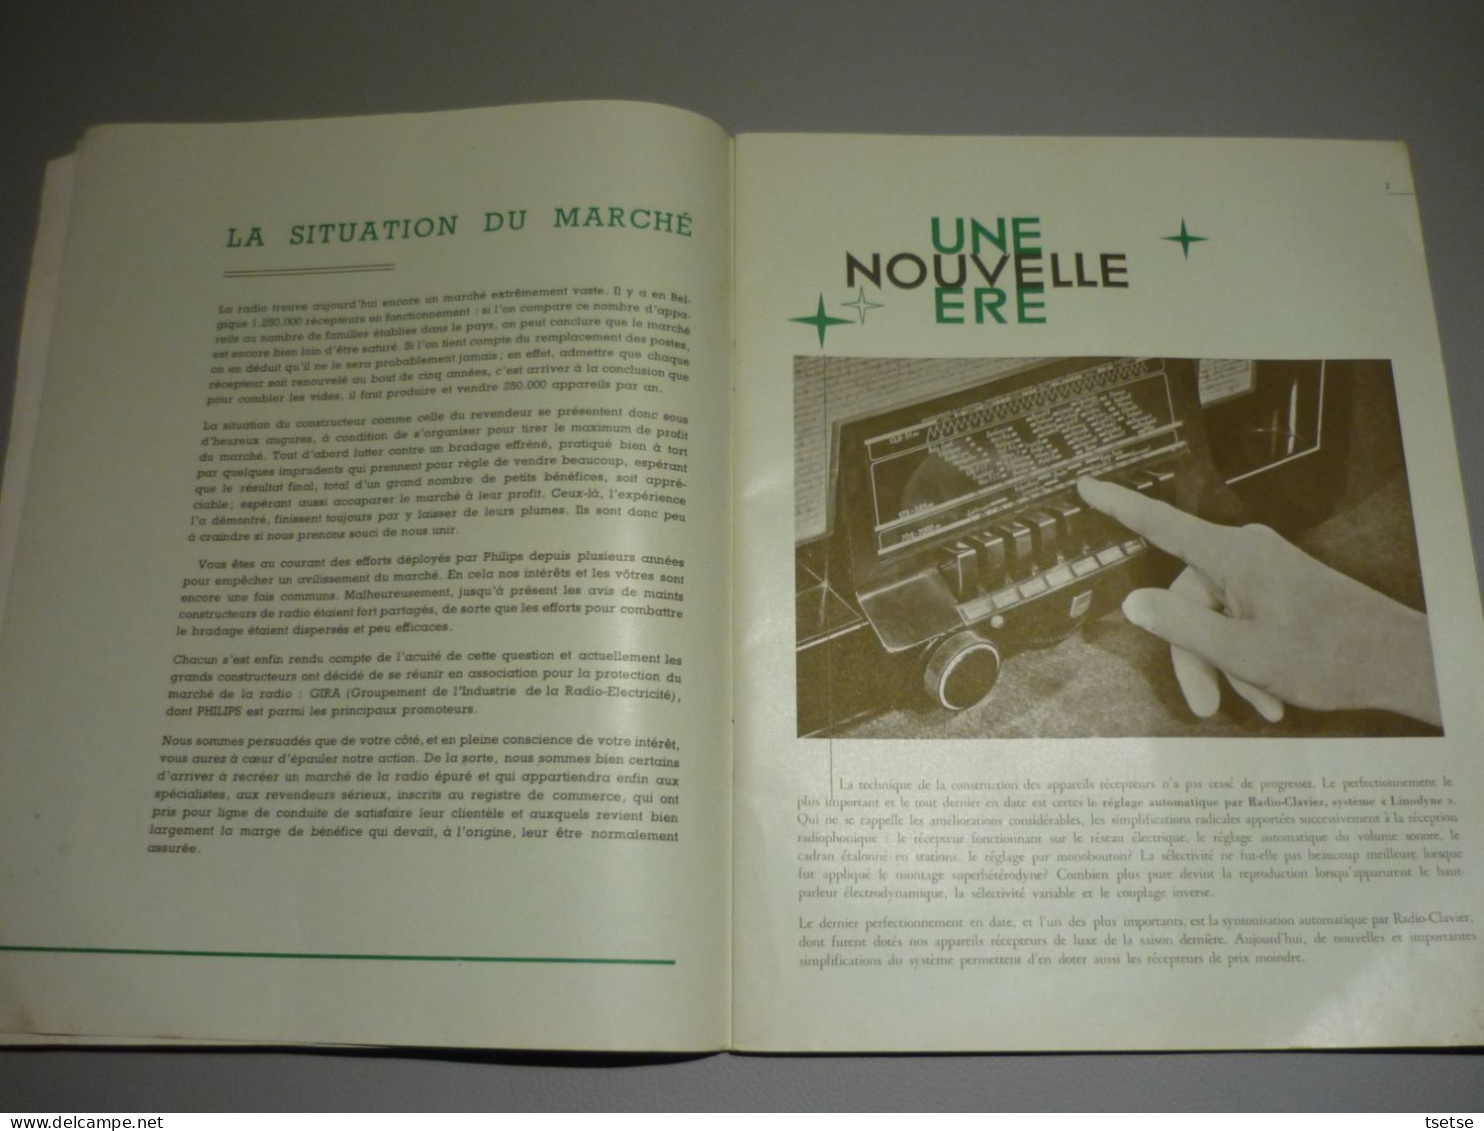 Philips-Bulletin / Nouveau Programme 1940 / Commercial-Documentaire-Technique - Supplies And Equipment